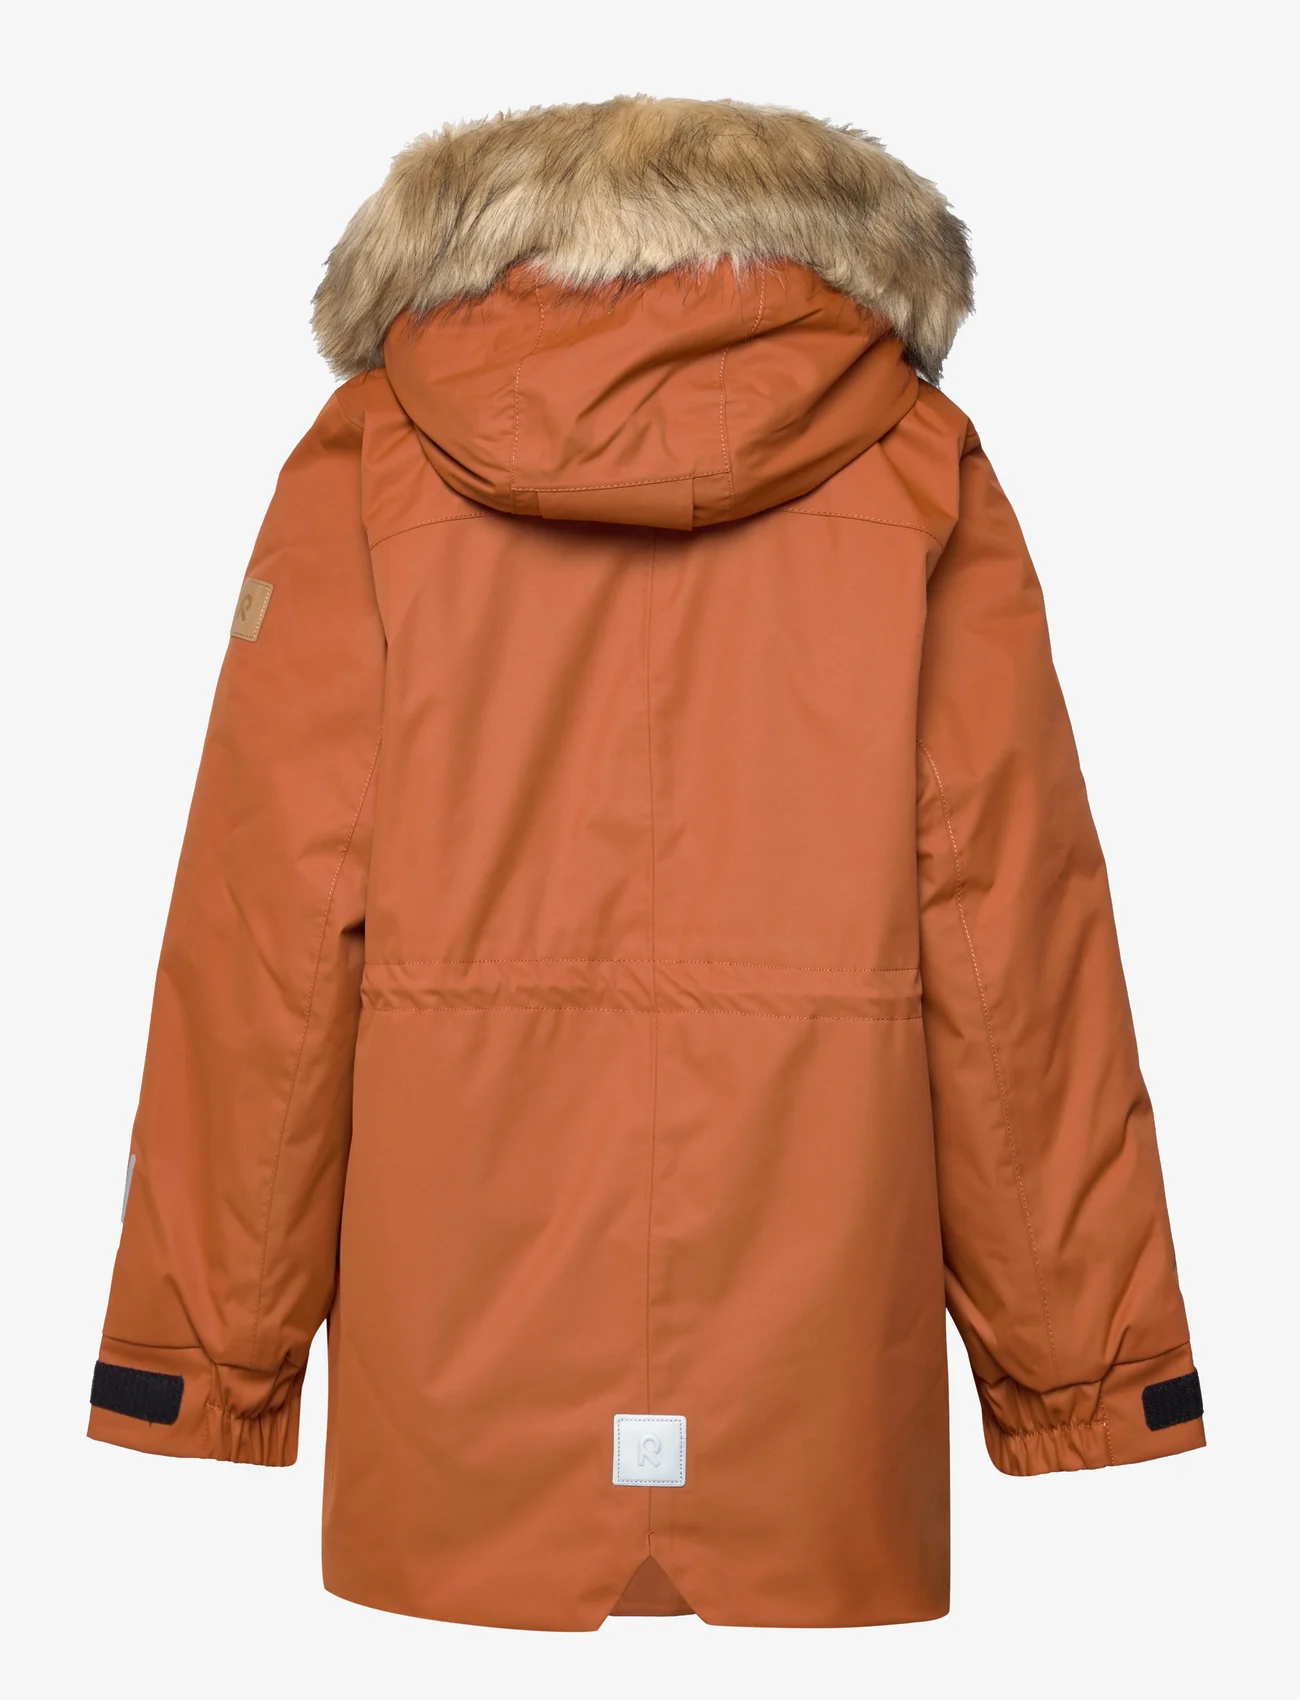 Reima - Reimatec winter jacket, Naapuri - parkas - cinnamon brown - 1